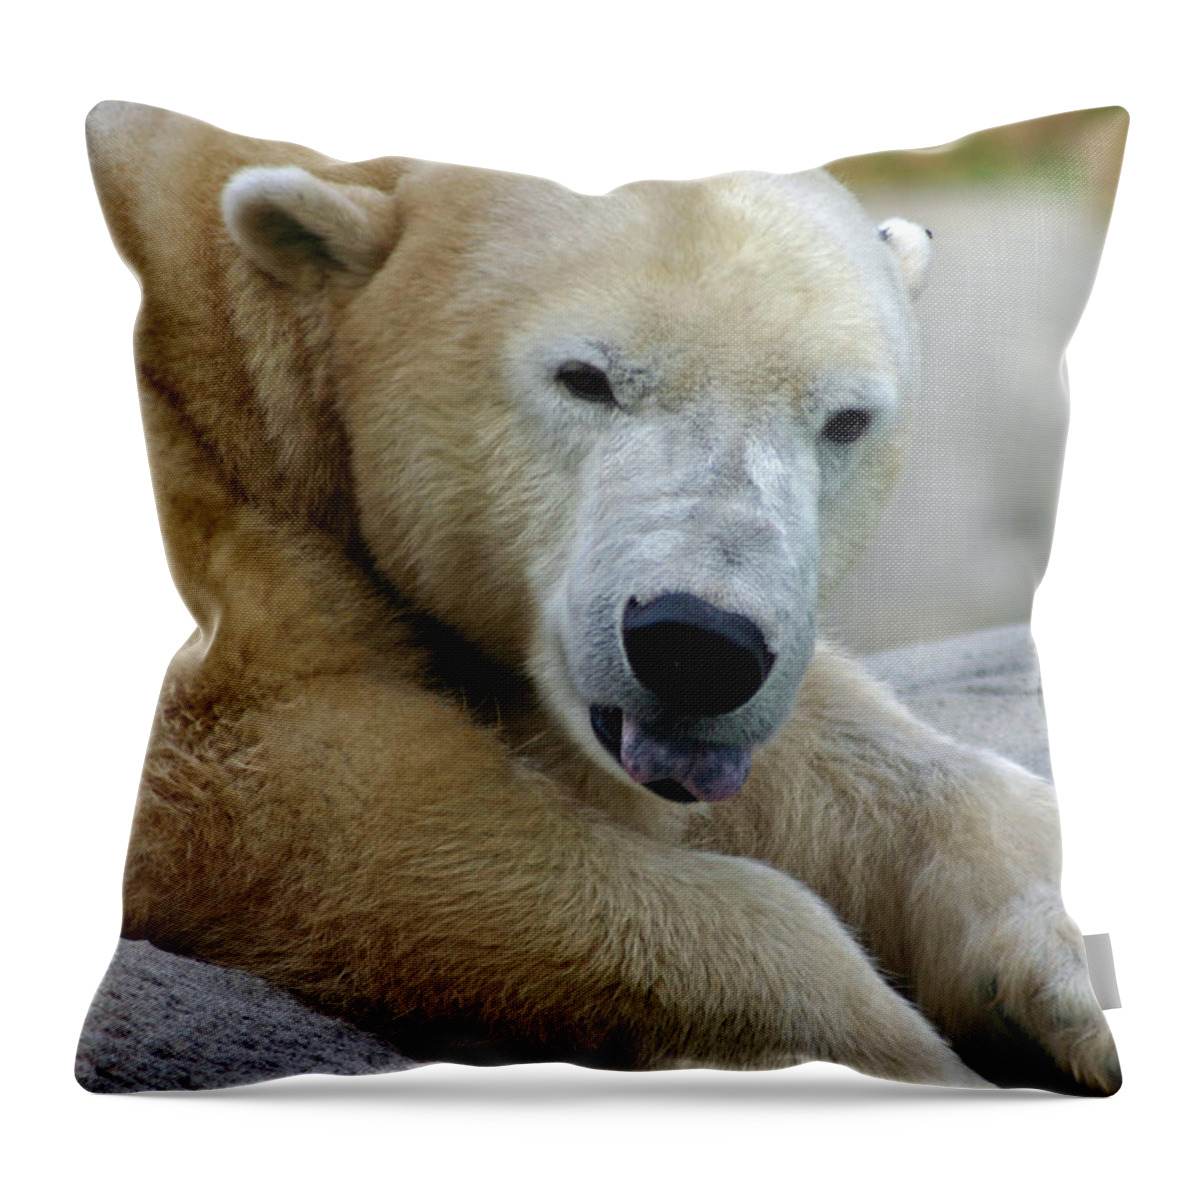 Zoo Throw Pillow featuring the photograph Polar Bear Waking by David Rucker